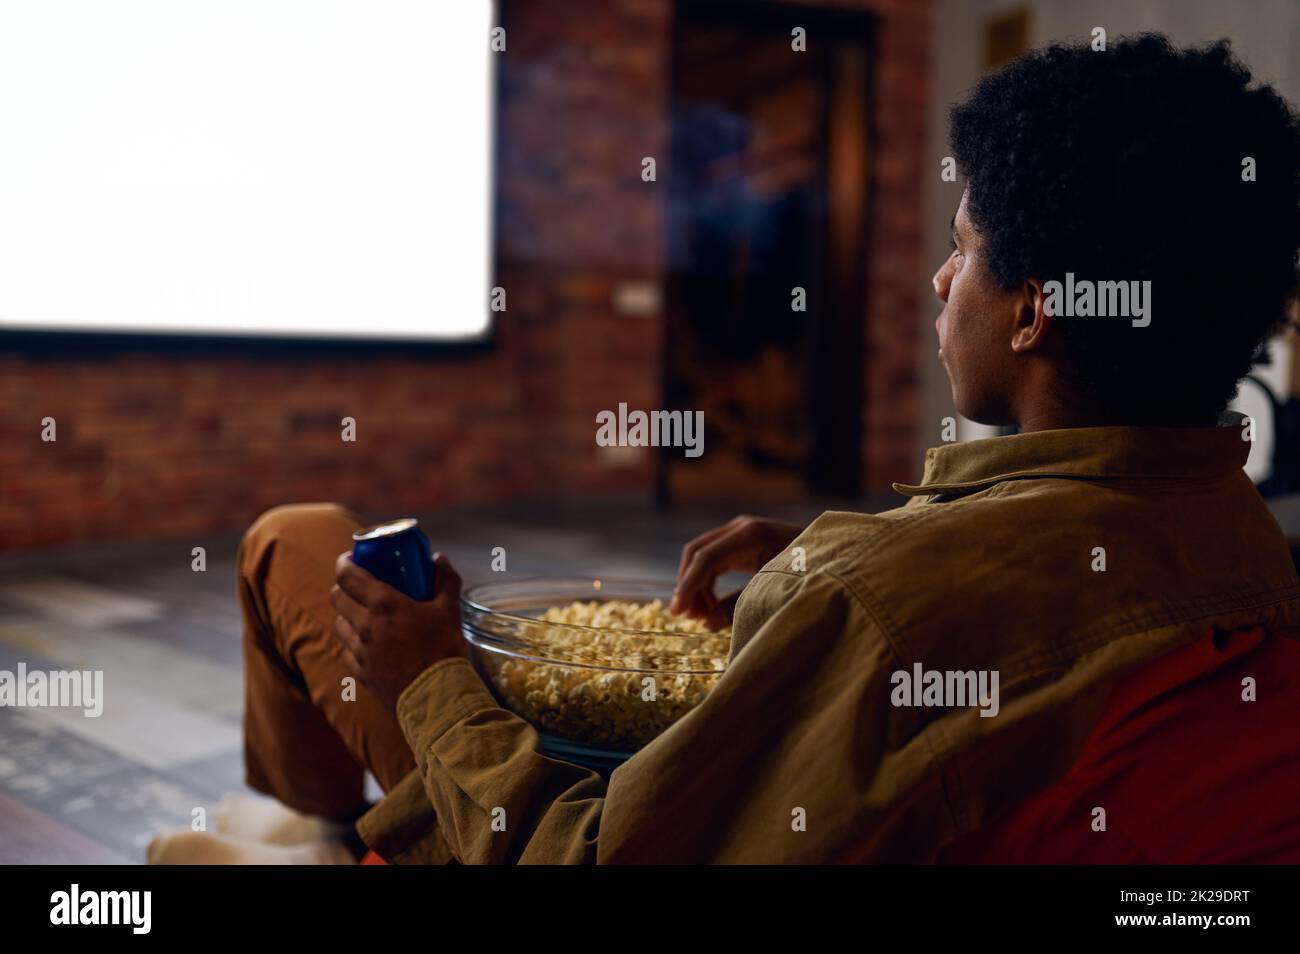 Man enjoy watching film using video projector Stock Photo